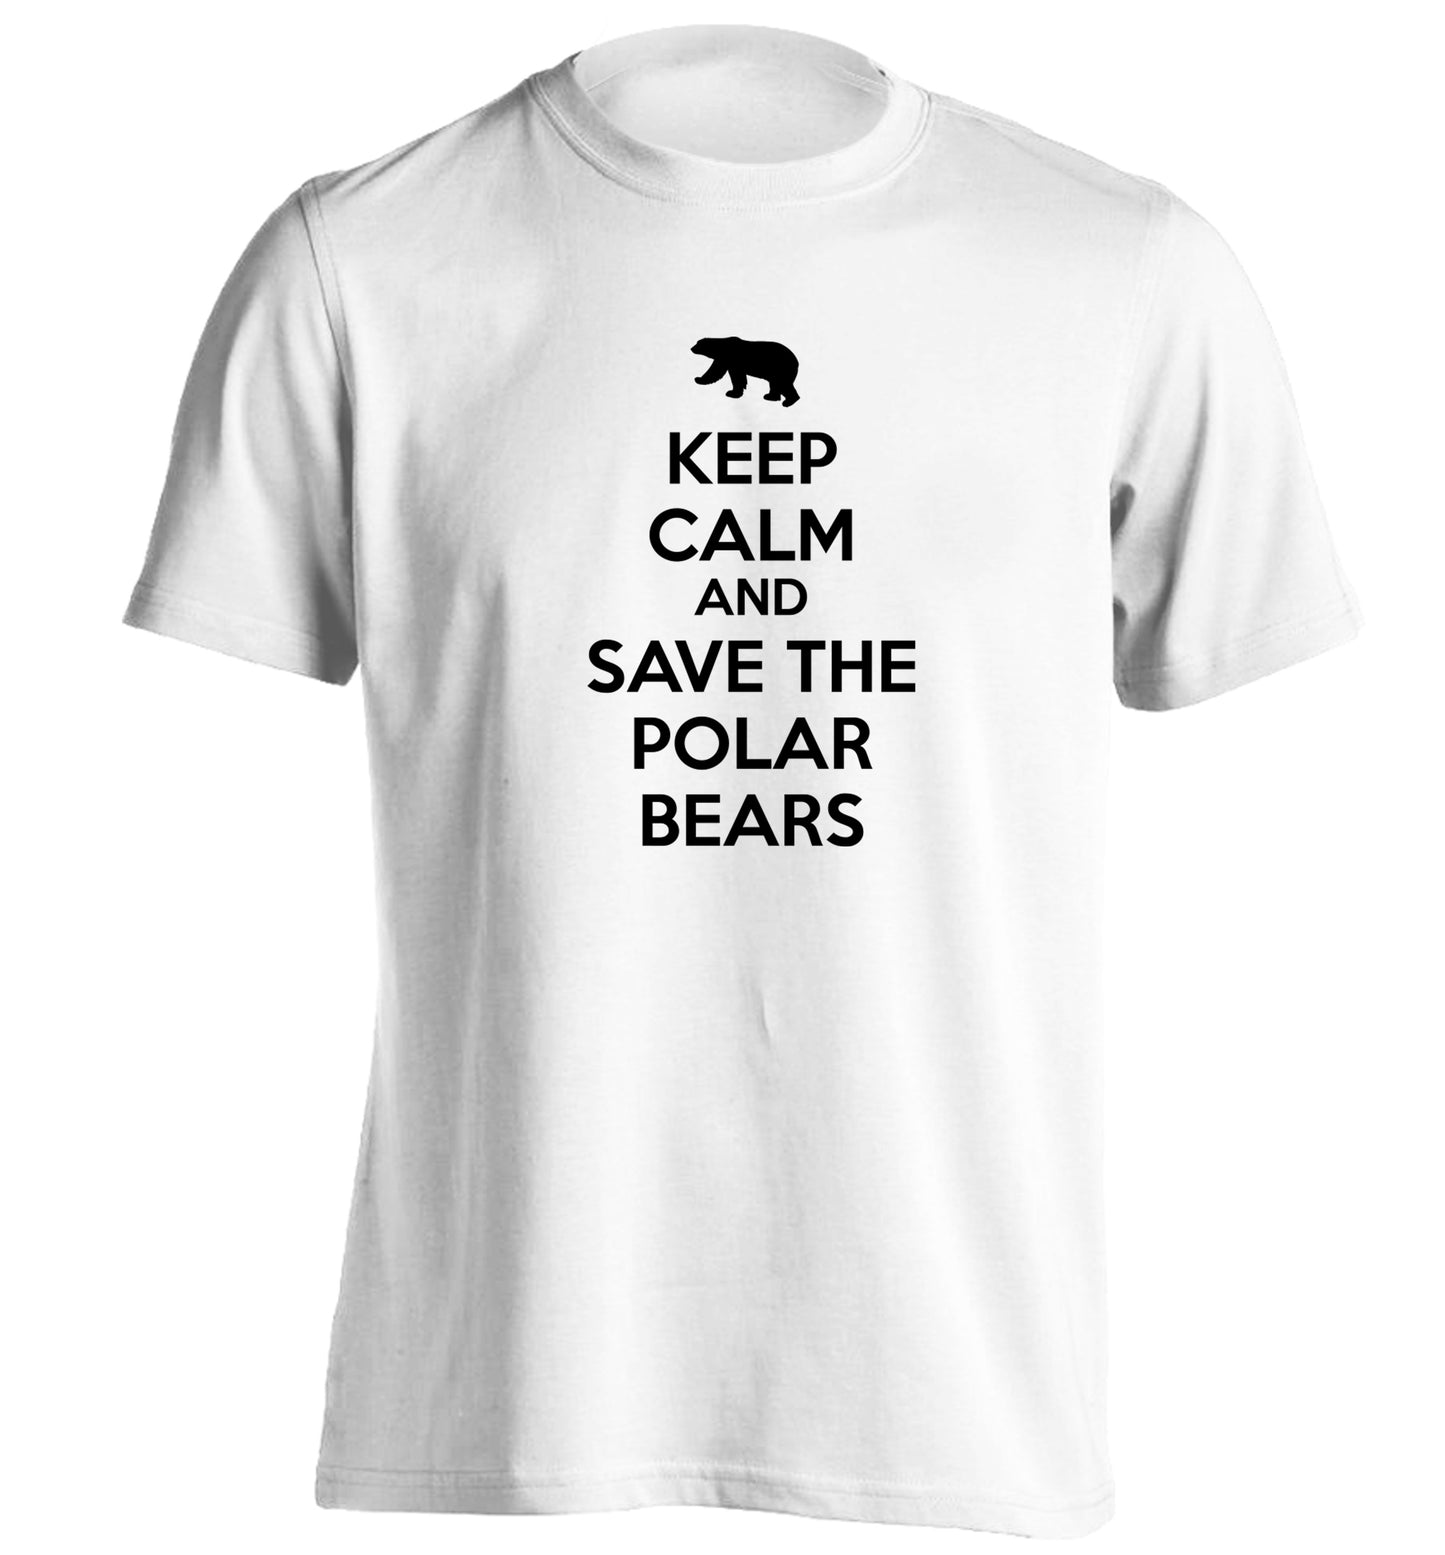 Keep calm and save the polar bears adults unisex white Tshirt 2XL